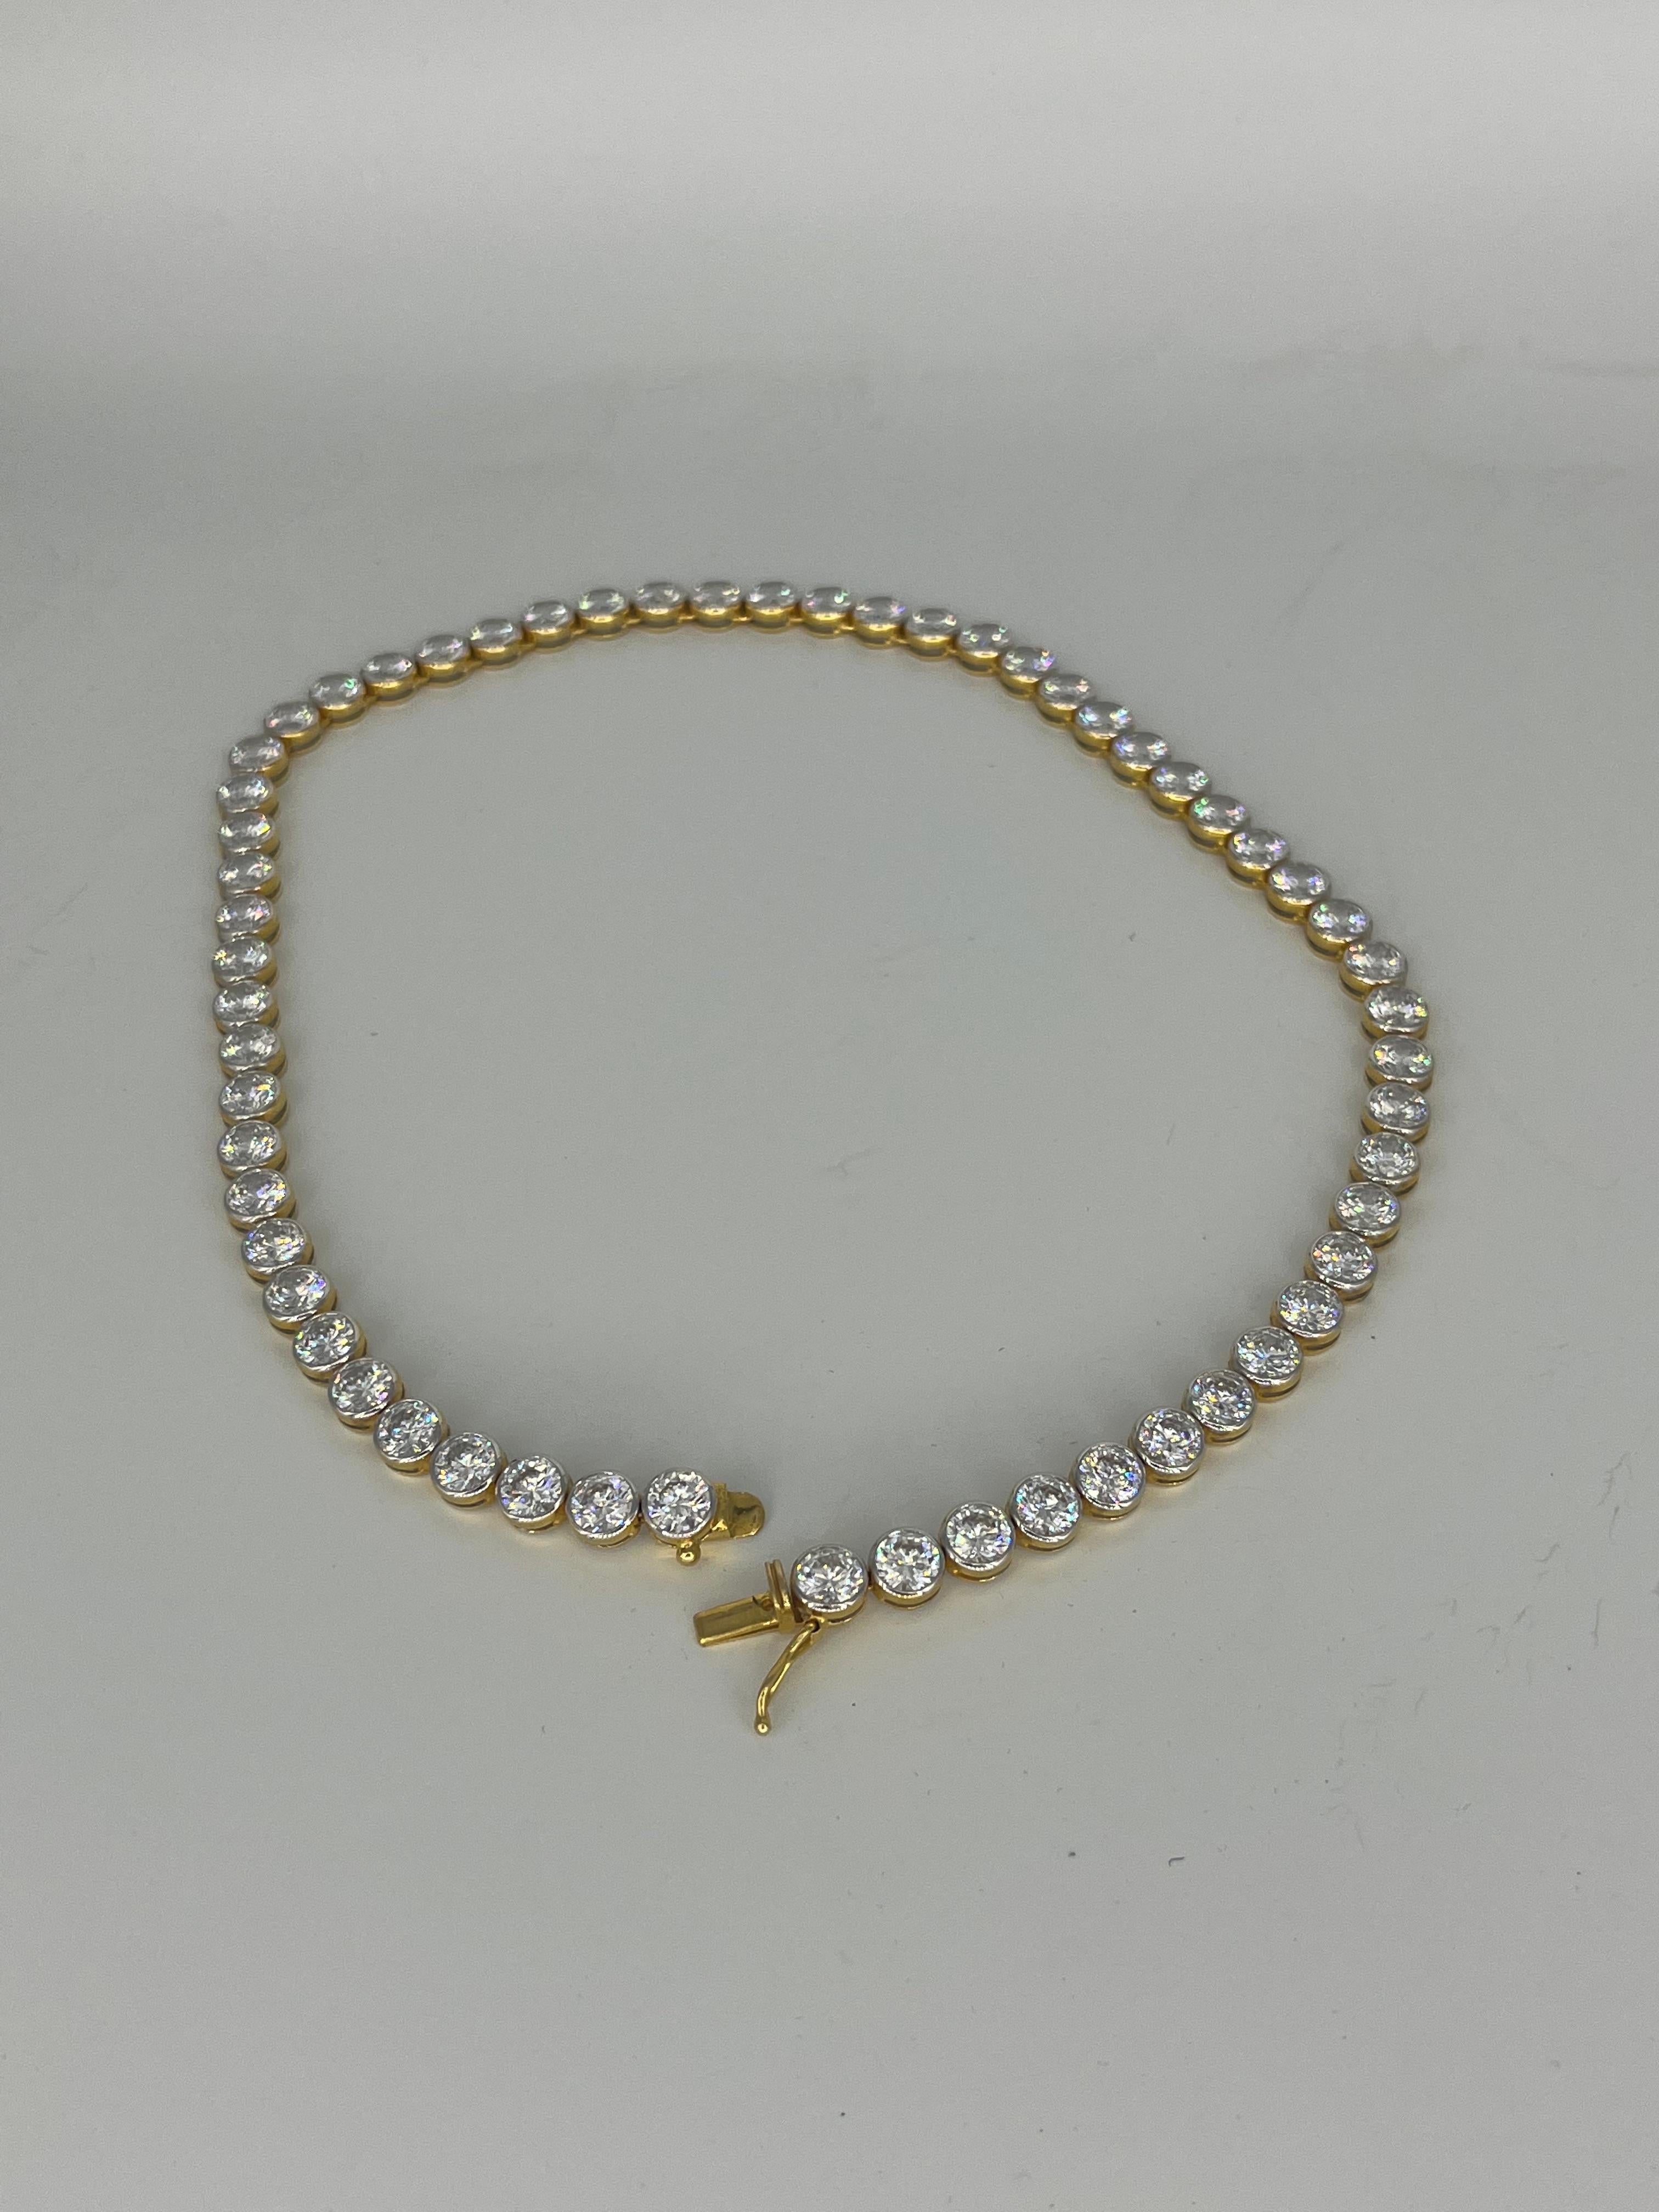 cambodian zirkon necklace
18 k yellow gold
62,5 gram
45 cm long
width ca 1 cm

